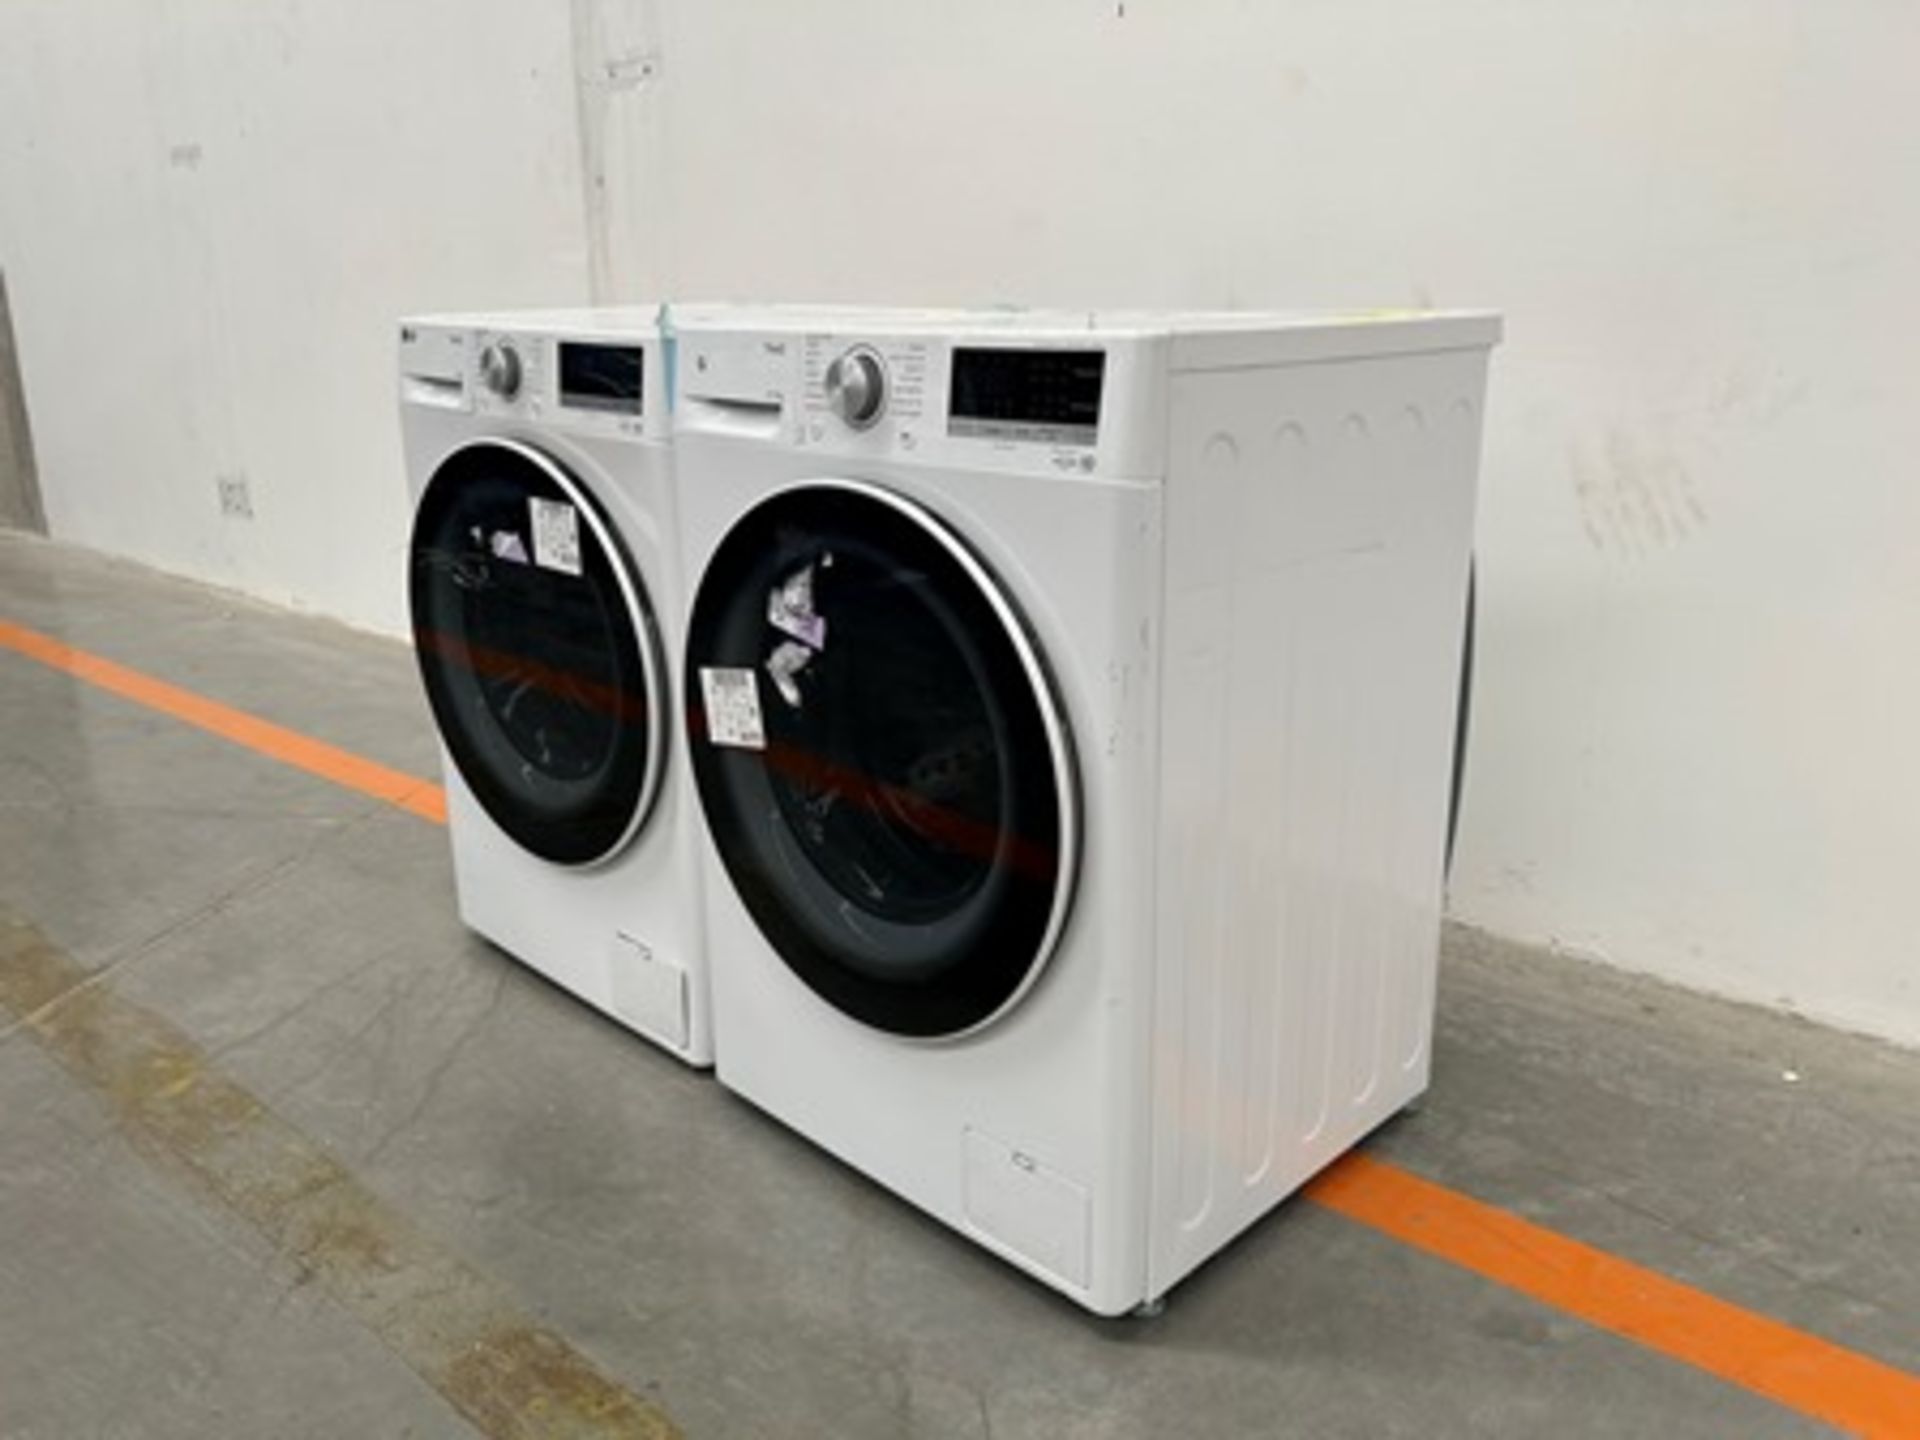 Lote de 2 lavadoras contiene: 1 Lavadora de 12 KG Marca LG, Modelo WM12WVC4S6, Serie 53874, Color B - Image 2 of 8